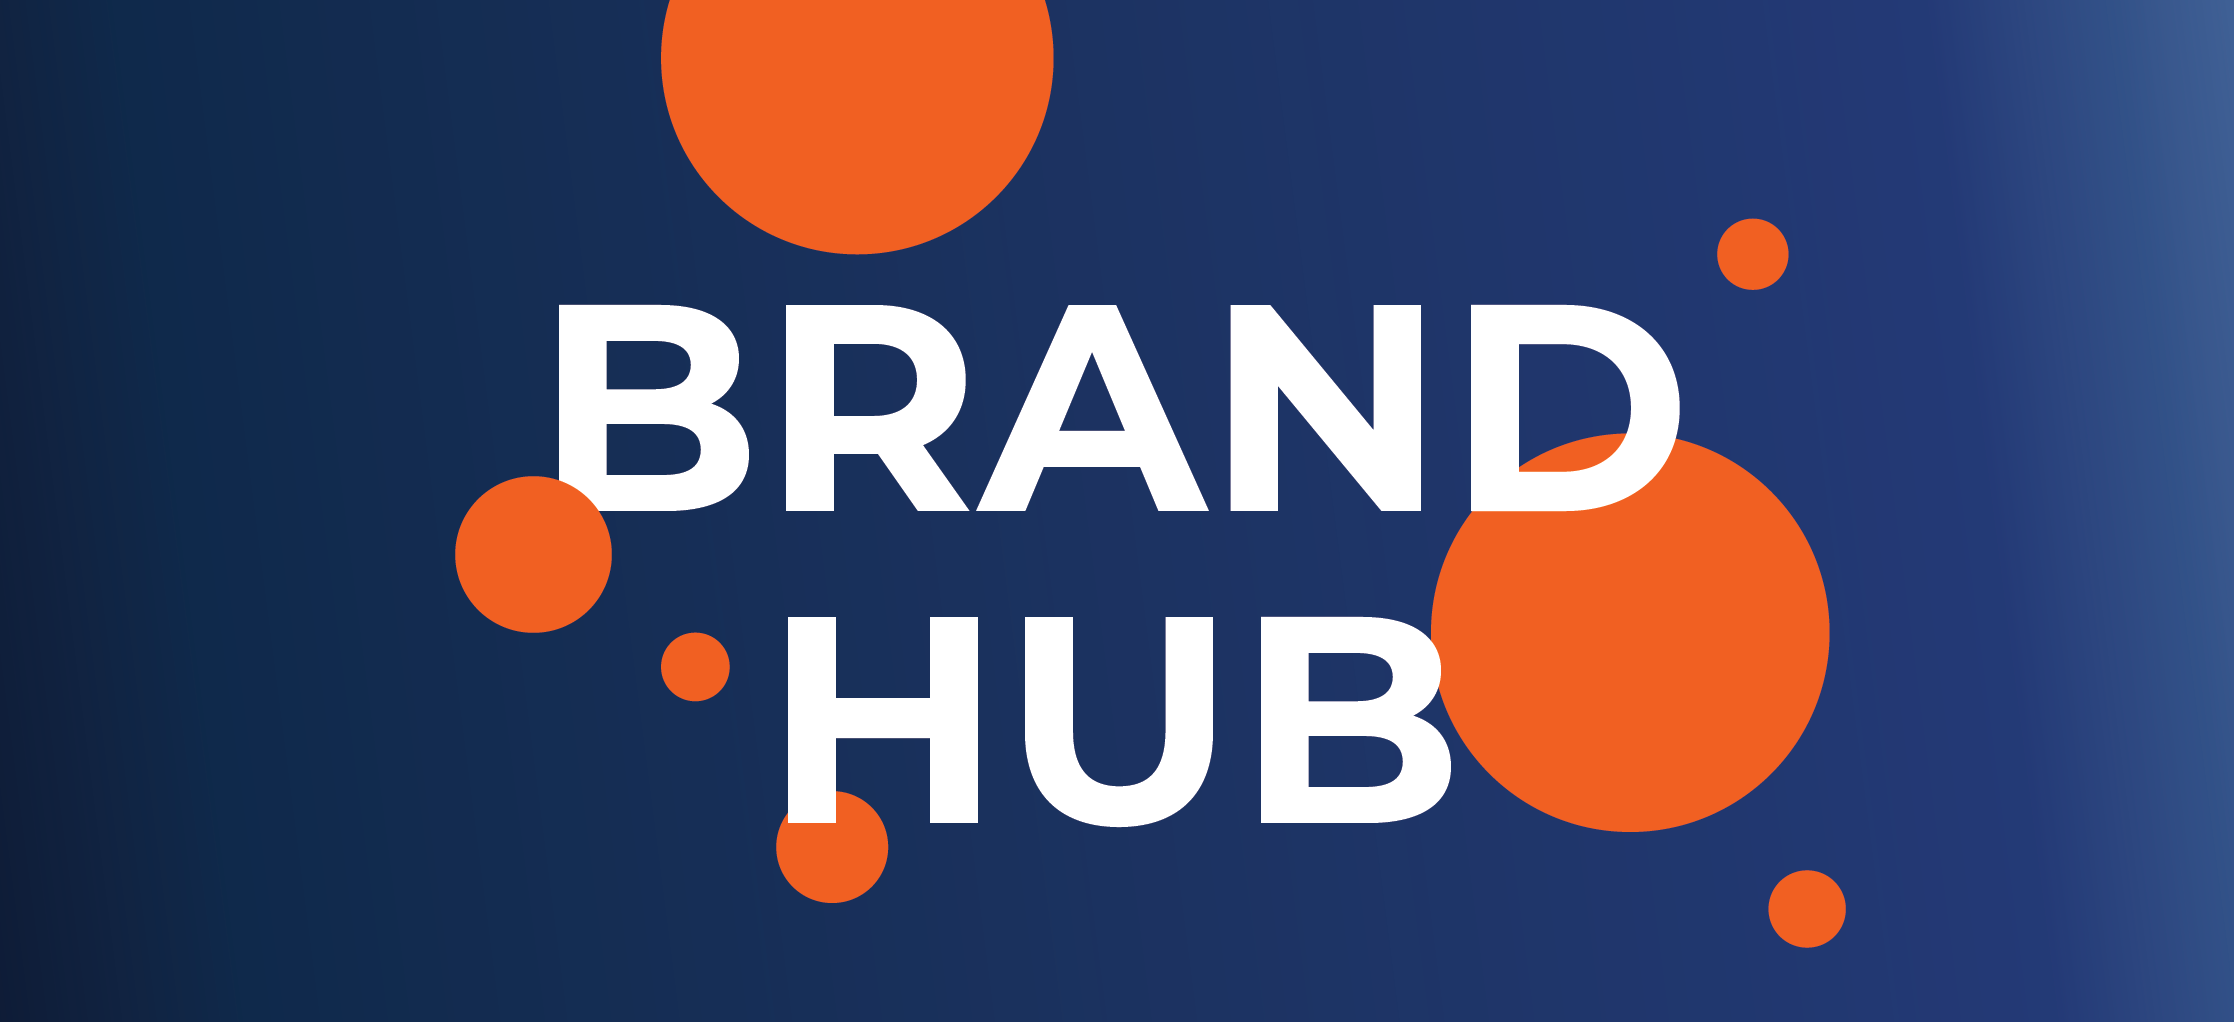 brand hub banner image